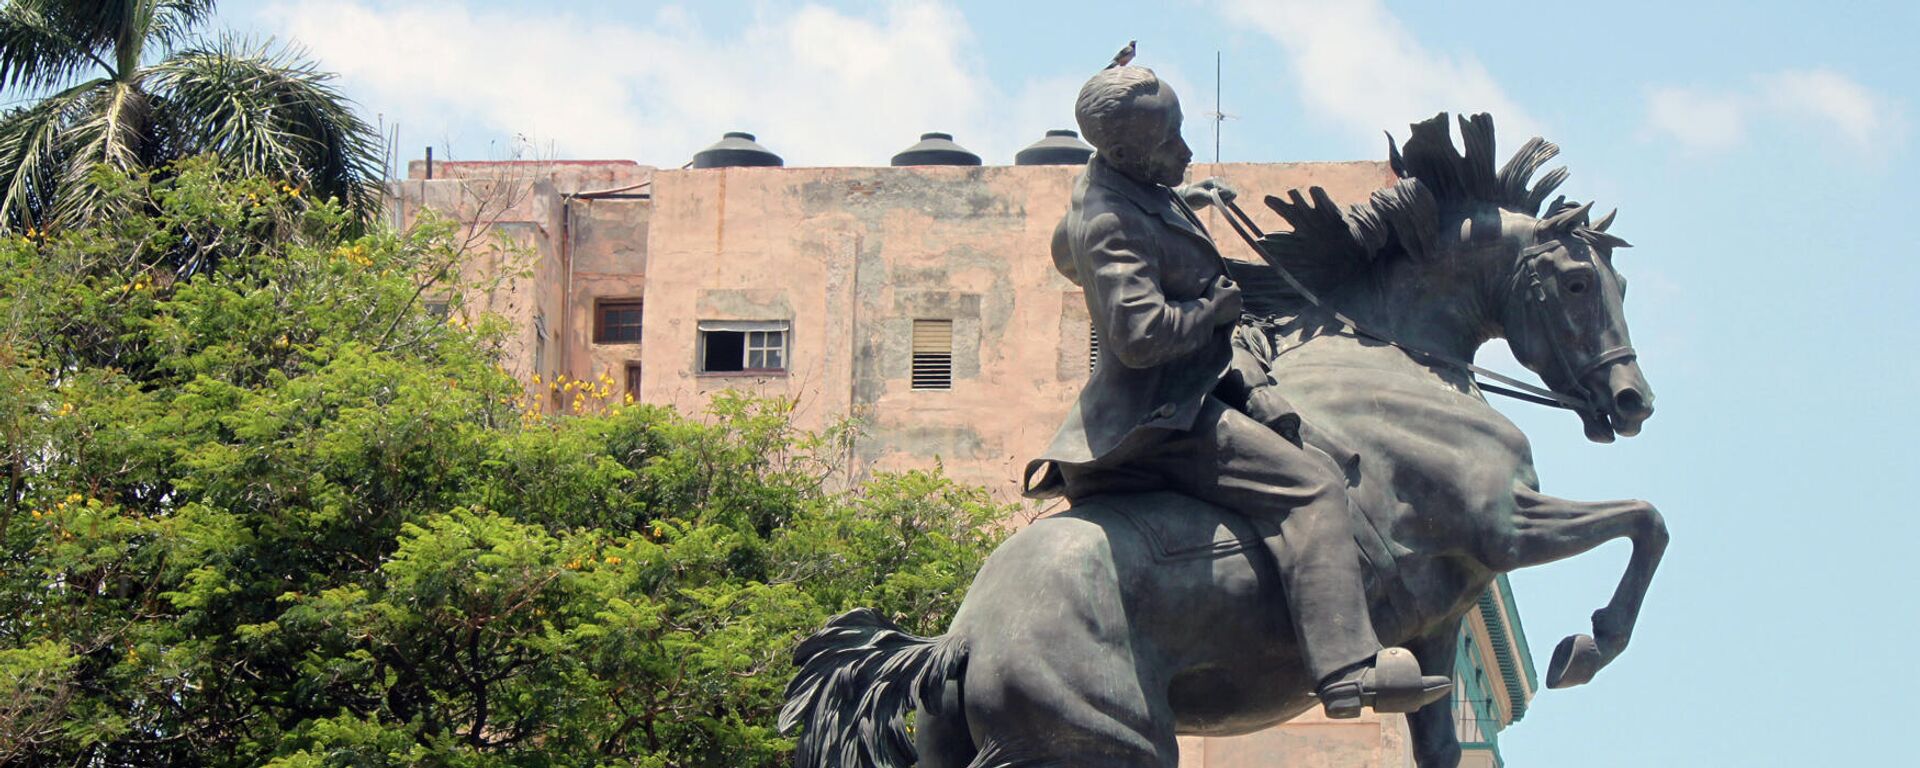 Estatua a José Martí en La Habana - Sputnik Mundo, 1920, 21.10.2021